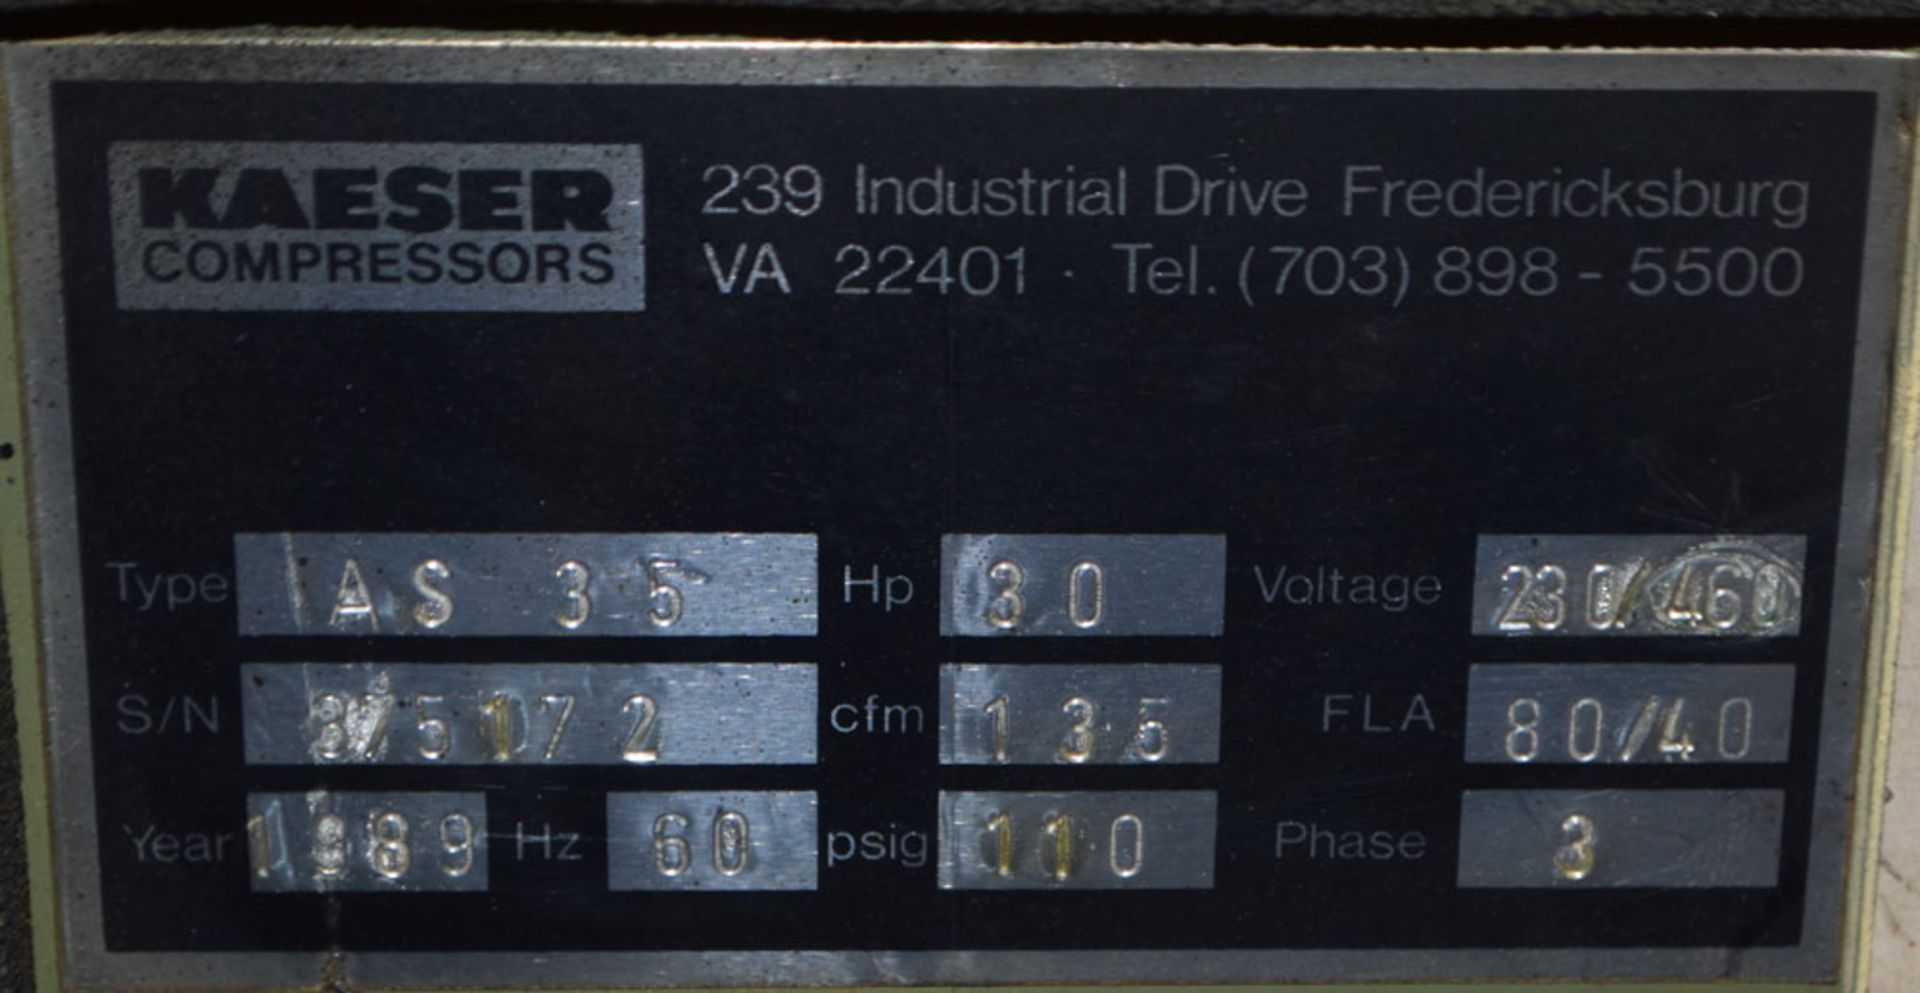 Kaeser AS-35 Rotary Screw Air Compressor, 15910 Hours on meter.; s/n: 375172 (1989) - Location in - Image 3 of 5